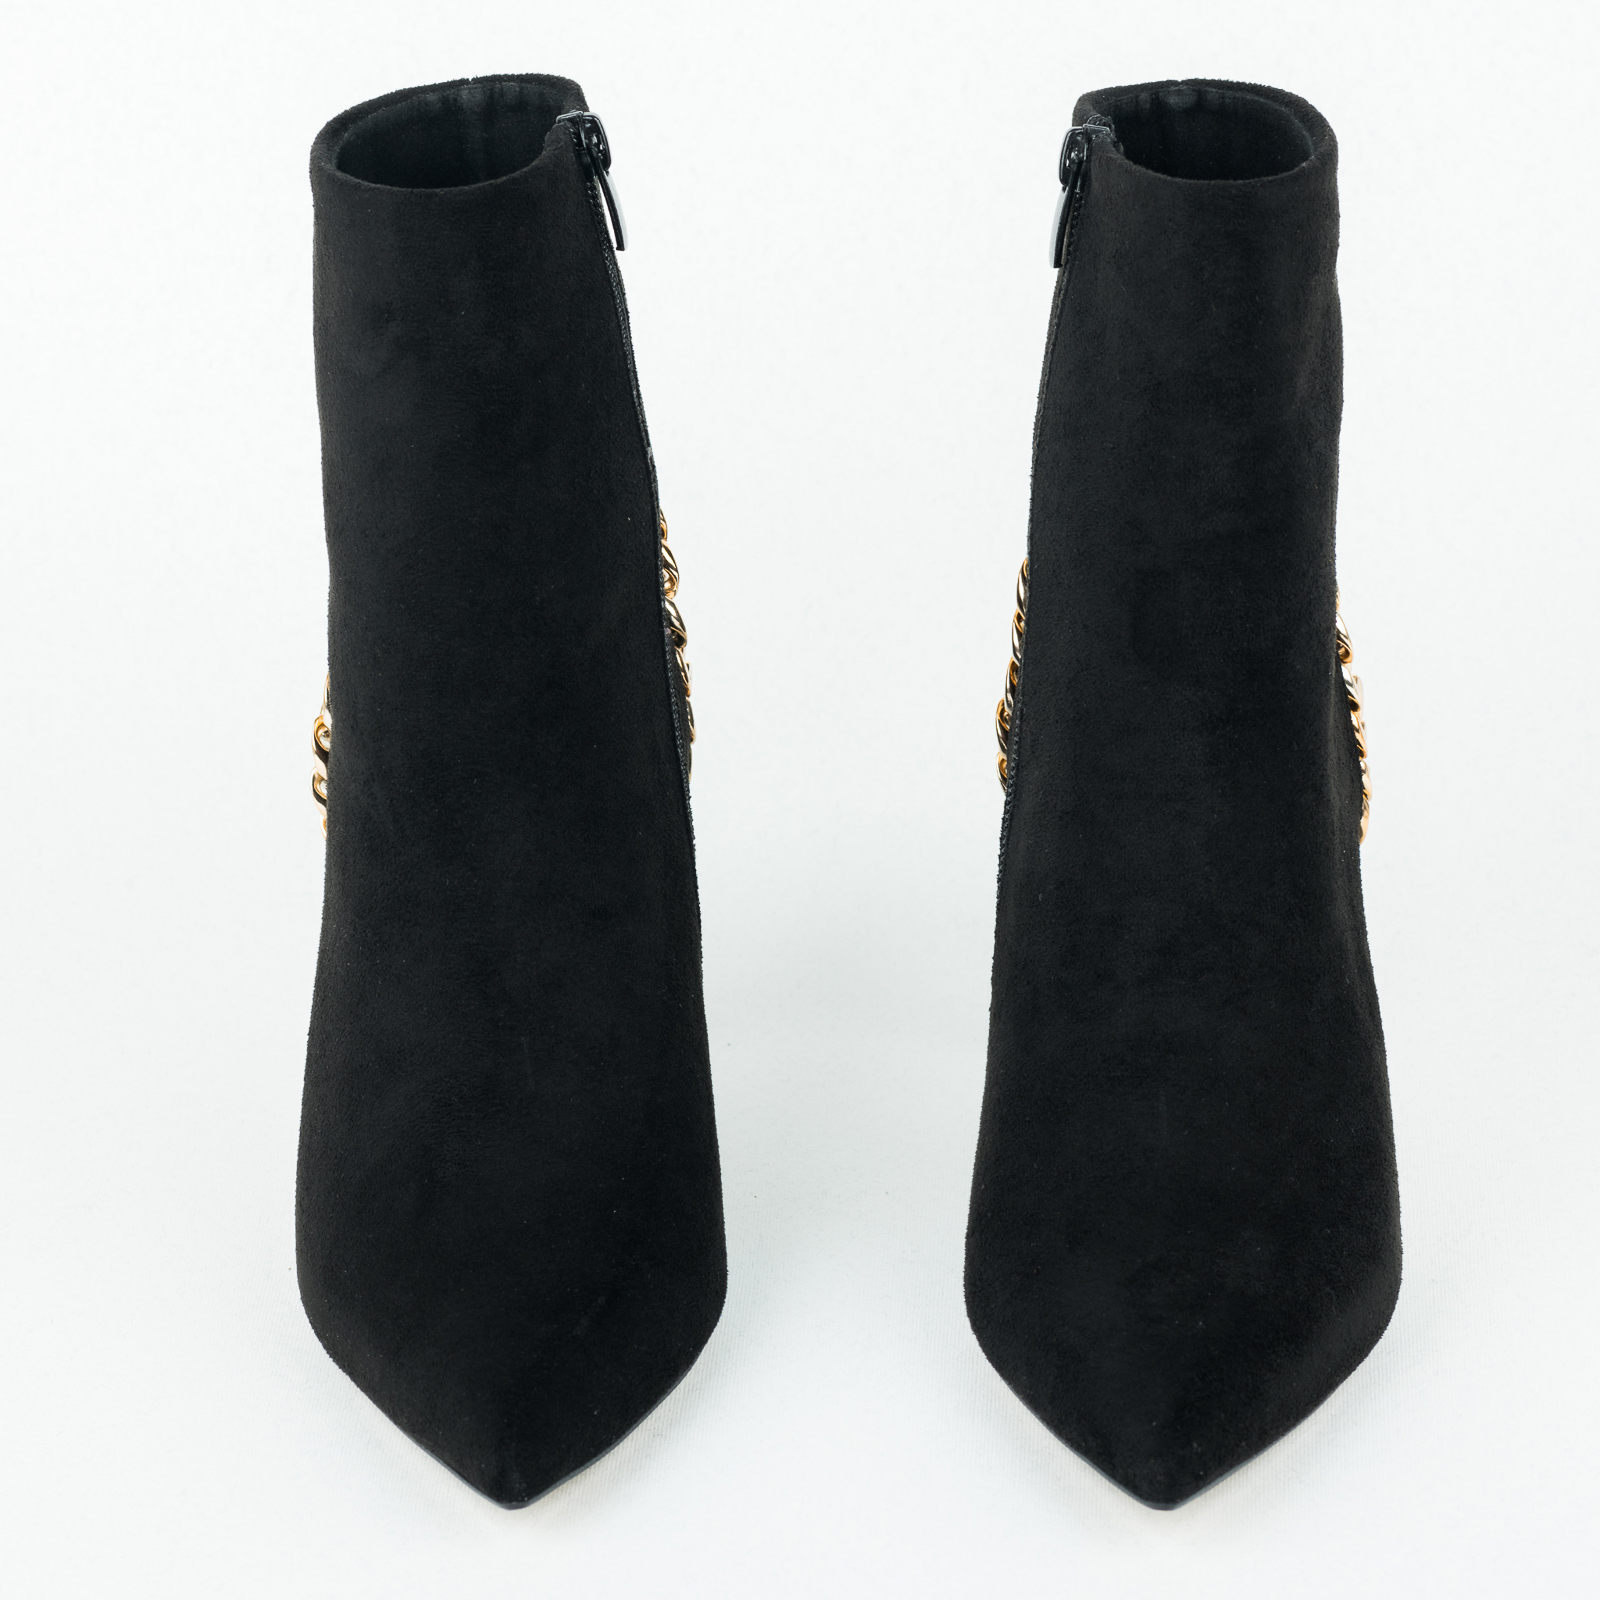 Women ankle boots B608 - BLACK